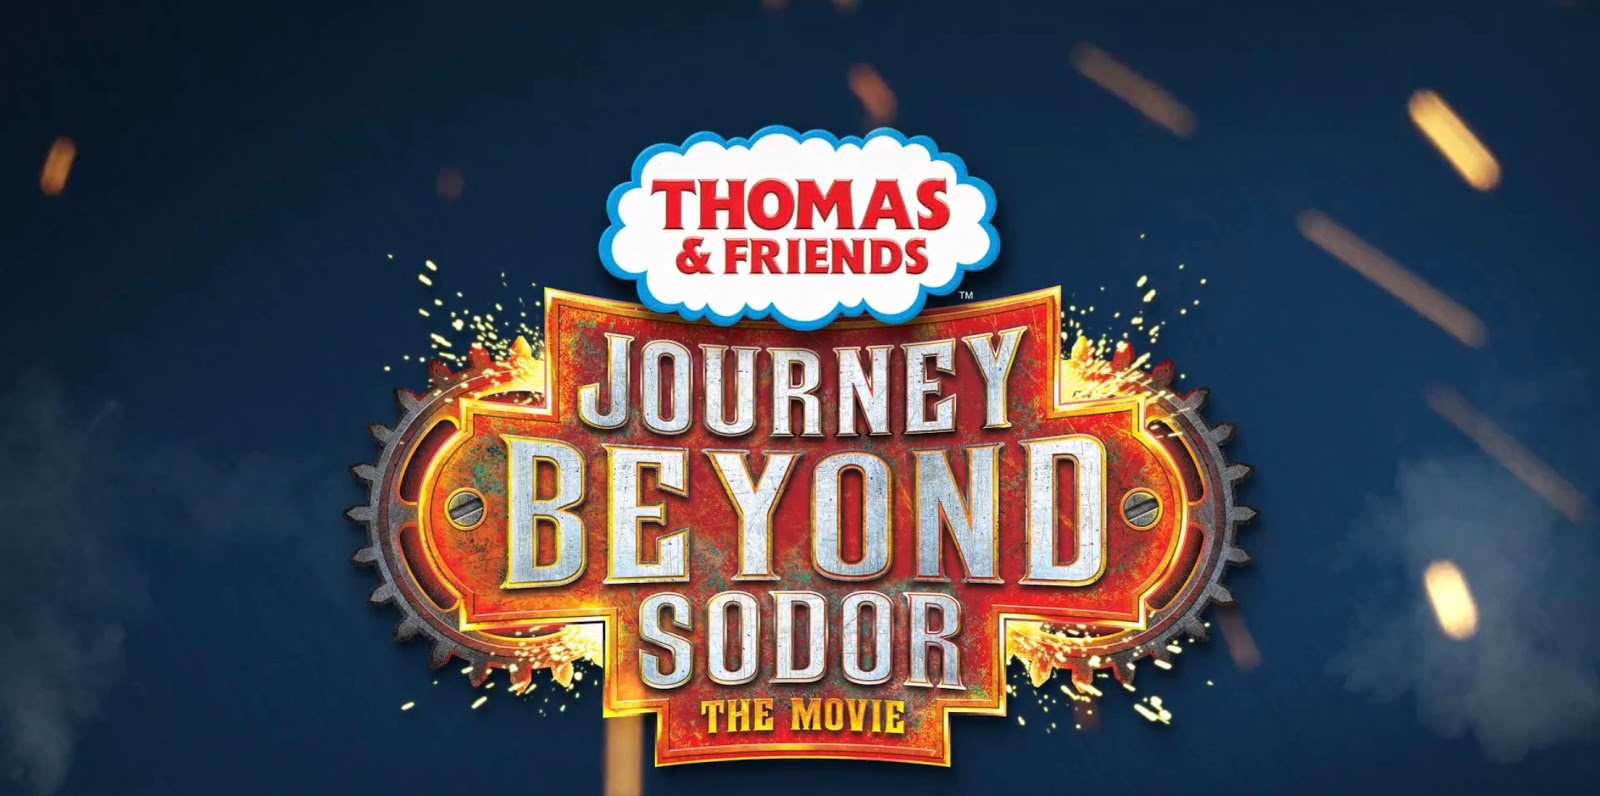 Journey to a friend. Journey Beyond Sodor. Friend's Journey. Journey Beyond Sodor DVD. Sports afield Journey safe.